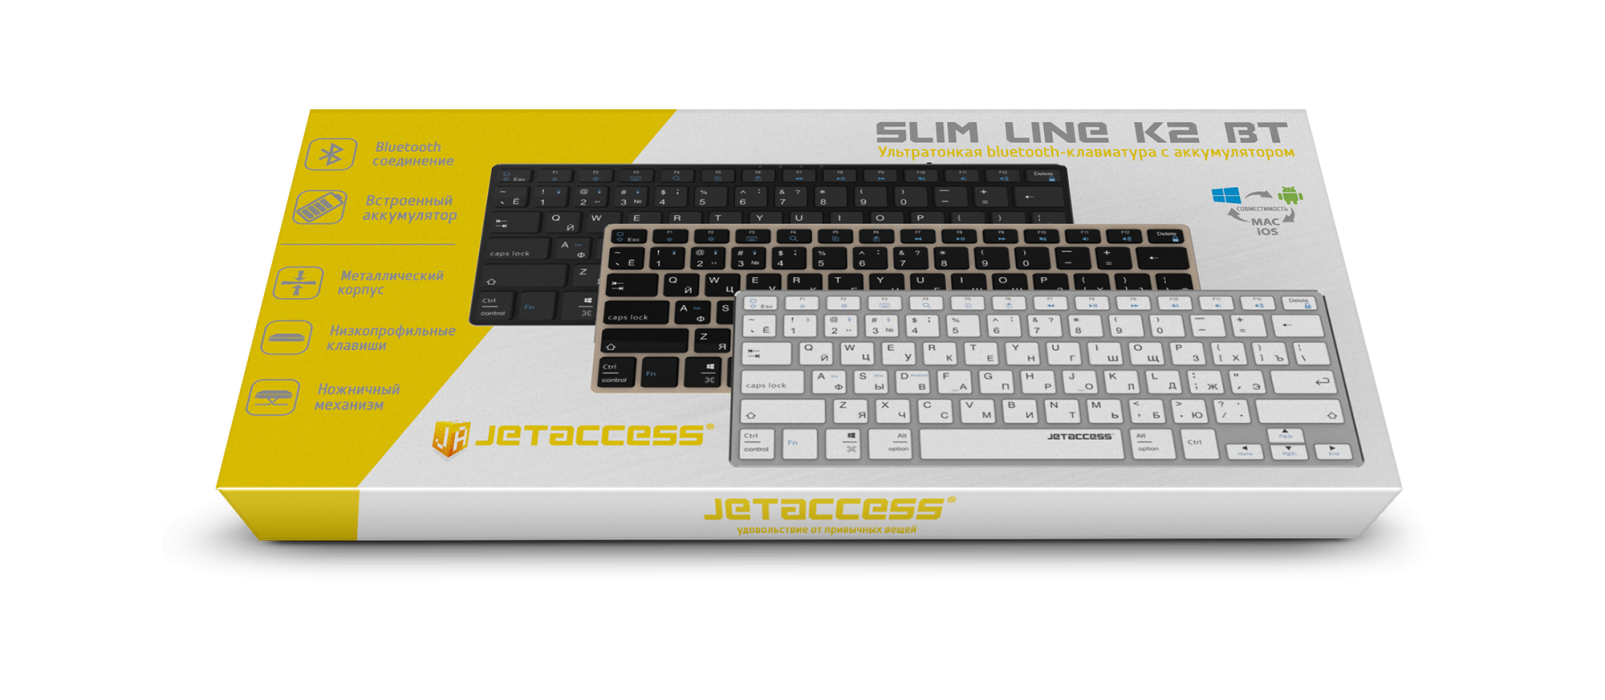 Ультратонкая bluetooth-клавиатура с аккумулятором SLIM LINE K2 BT6